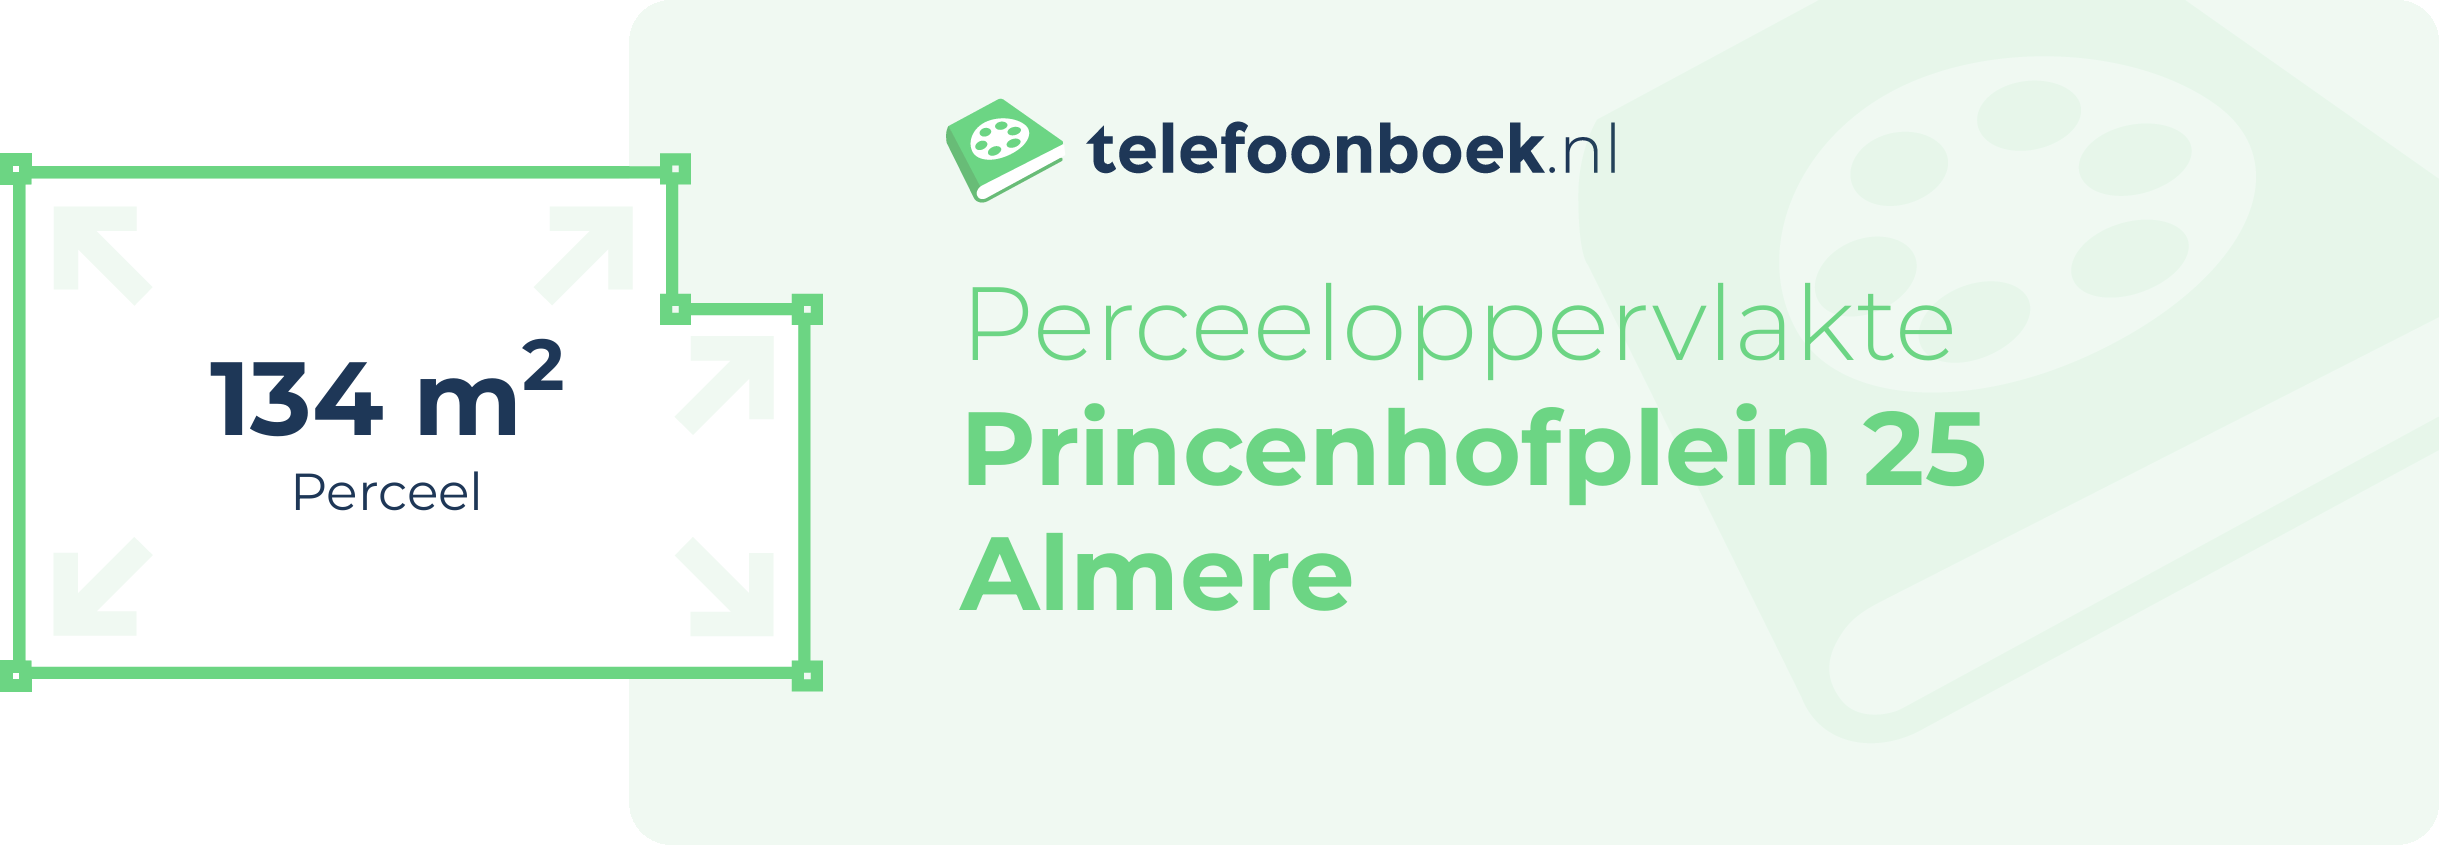 Perceeloppervlakte Princenhofplein 25 Almere